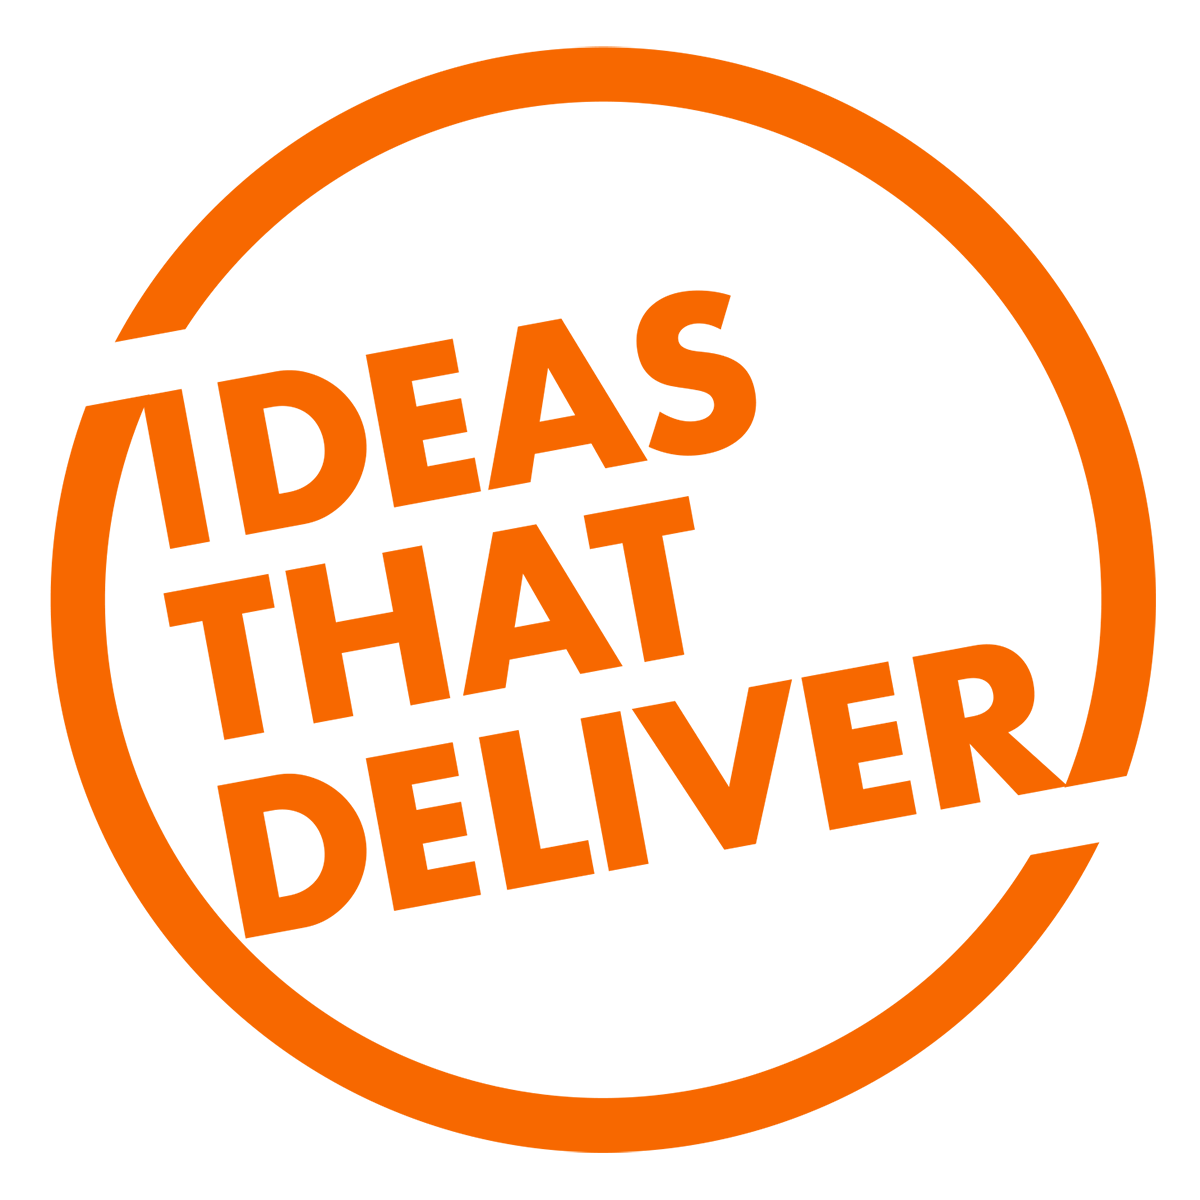 Ideas That Deliver